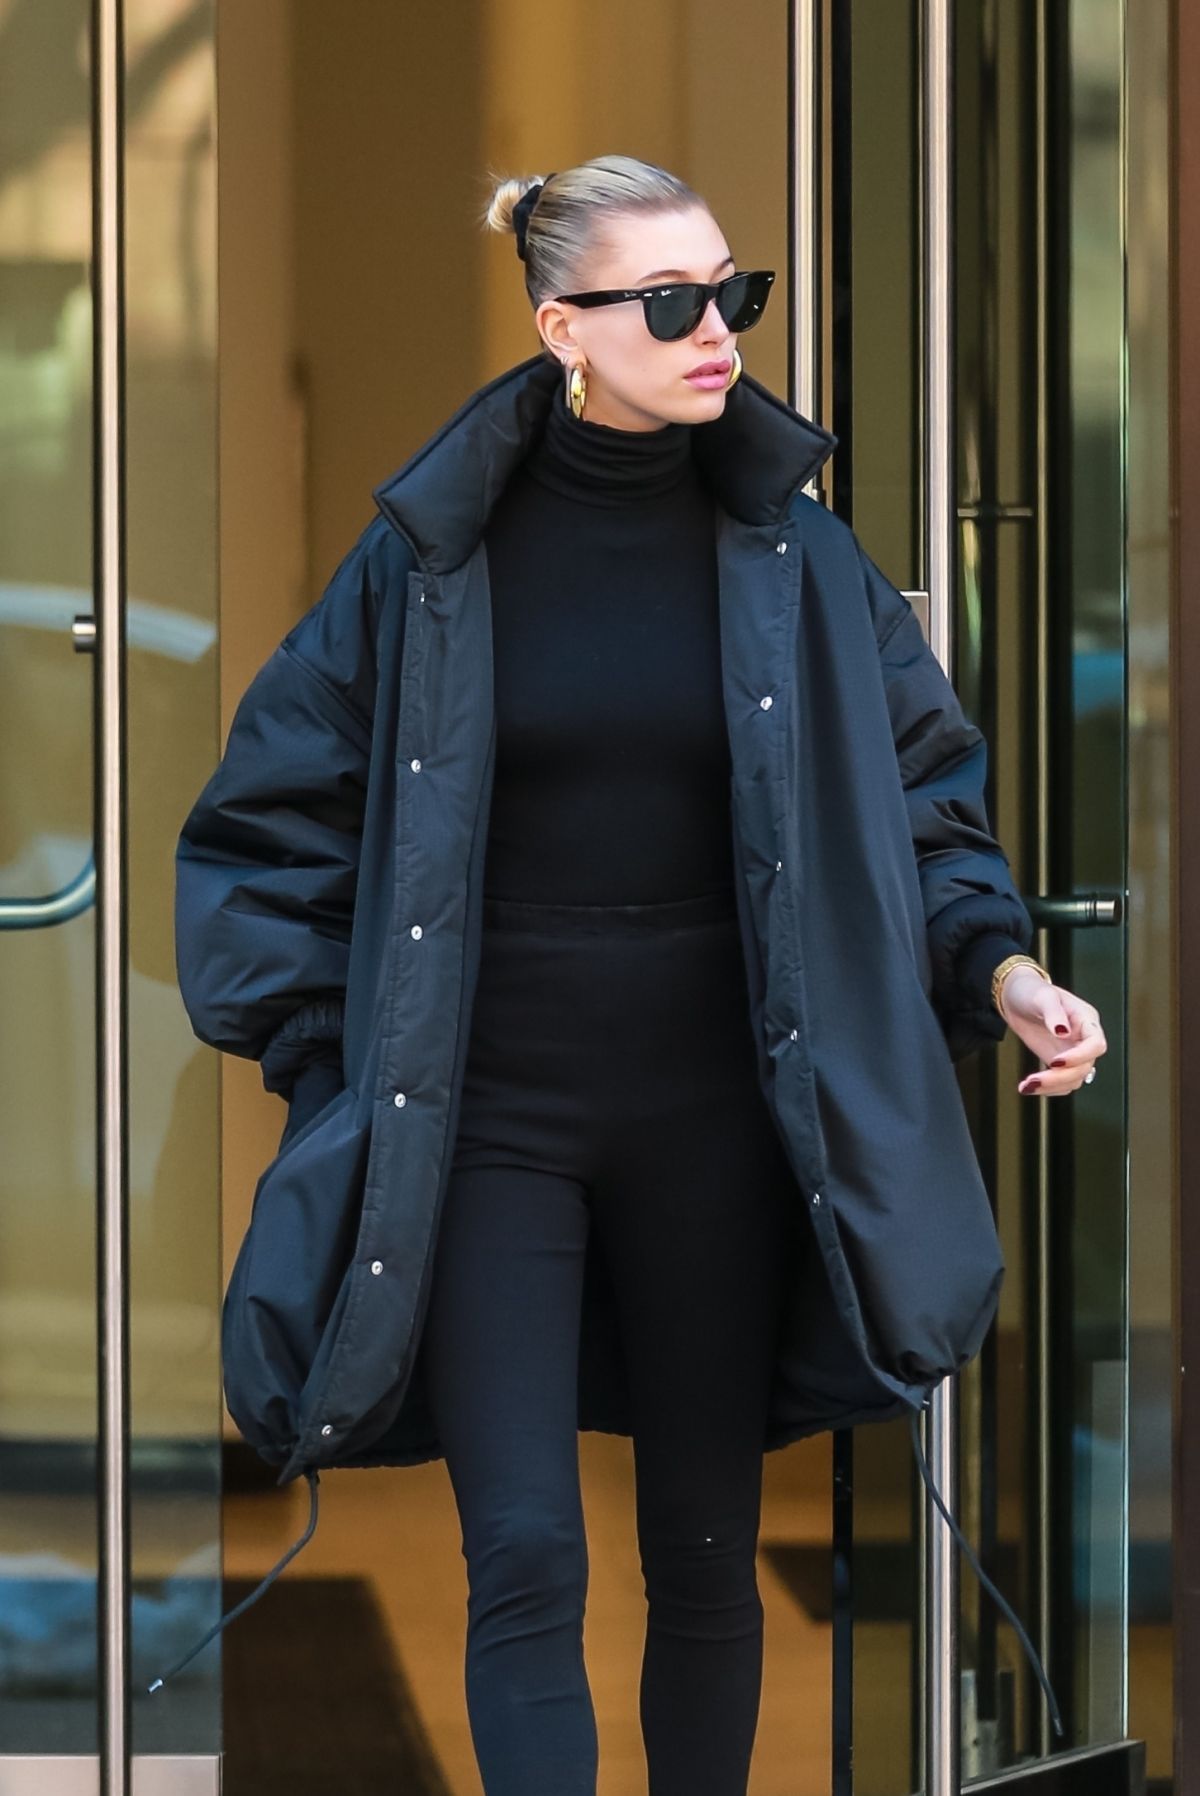 Hailey Baldwin Leaving a Studio in New York October 30, 2019 – Star Style